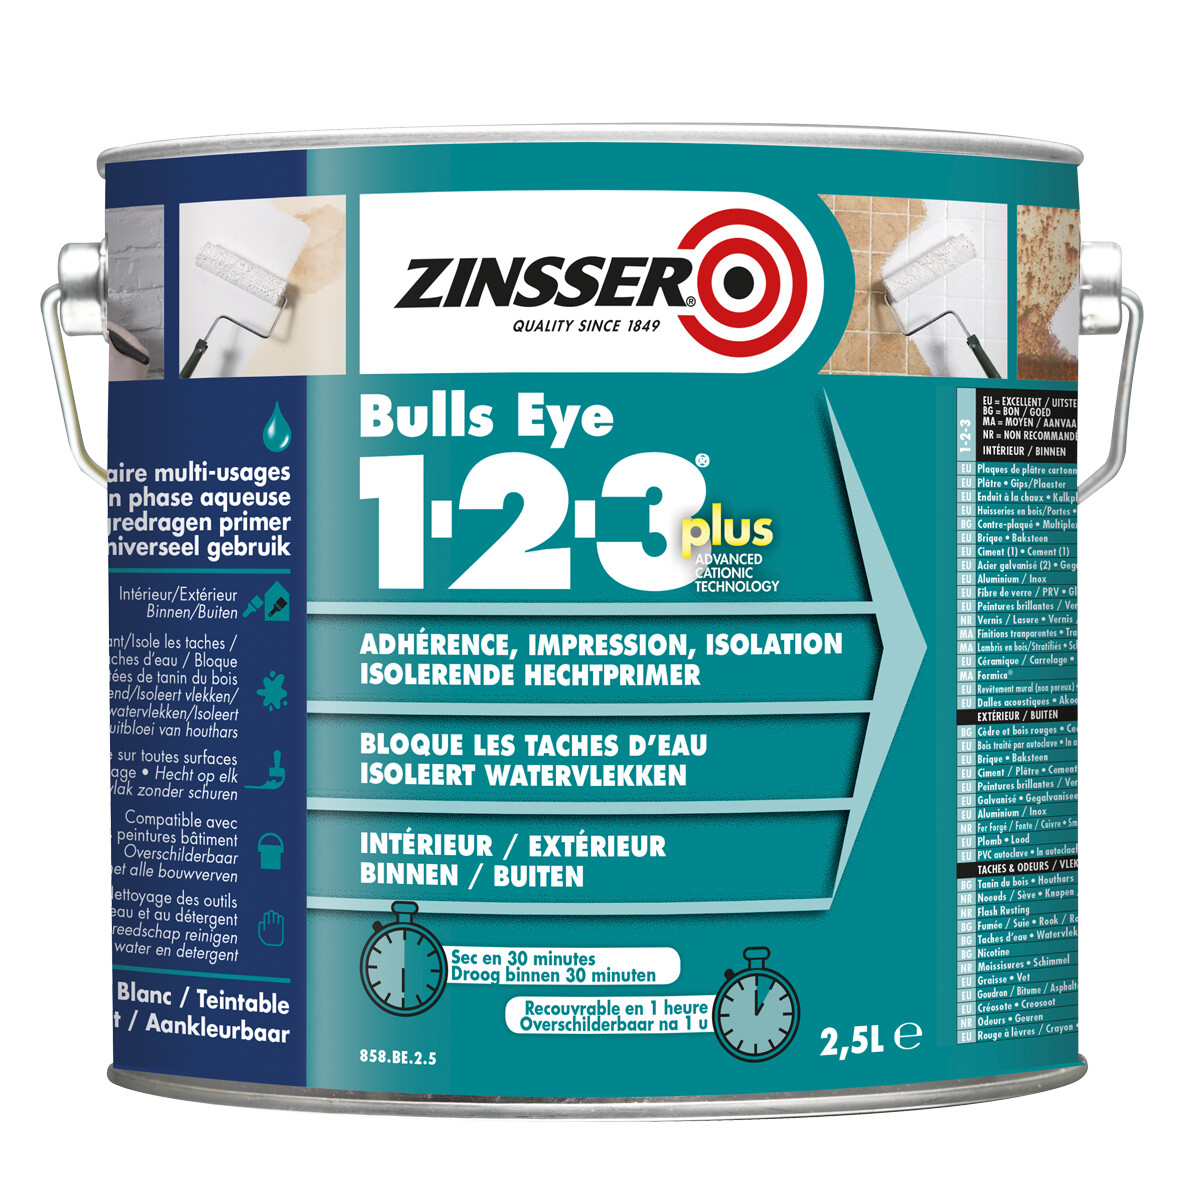 Zinsser Bulls Eye 123 Plus - BLANC